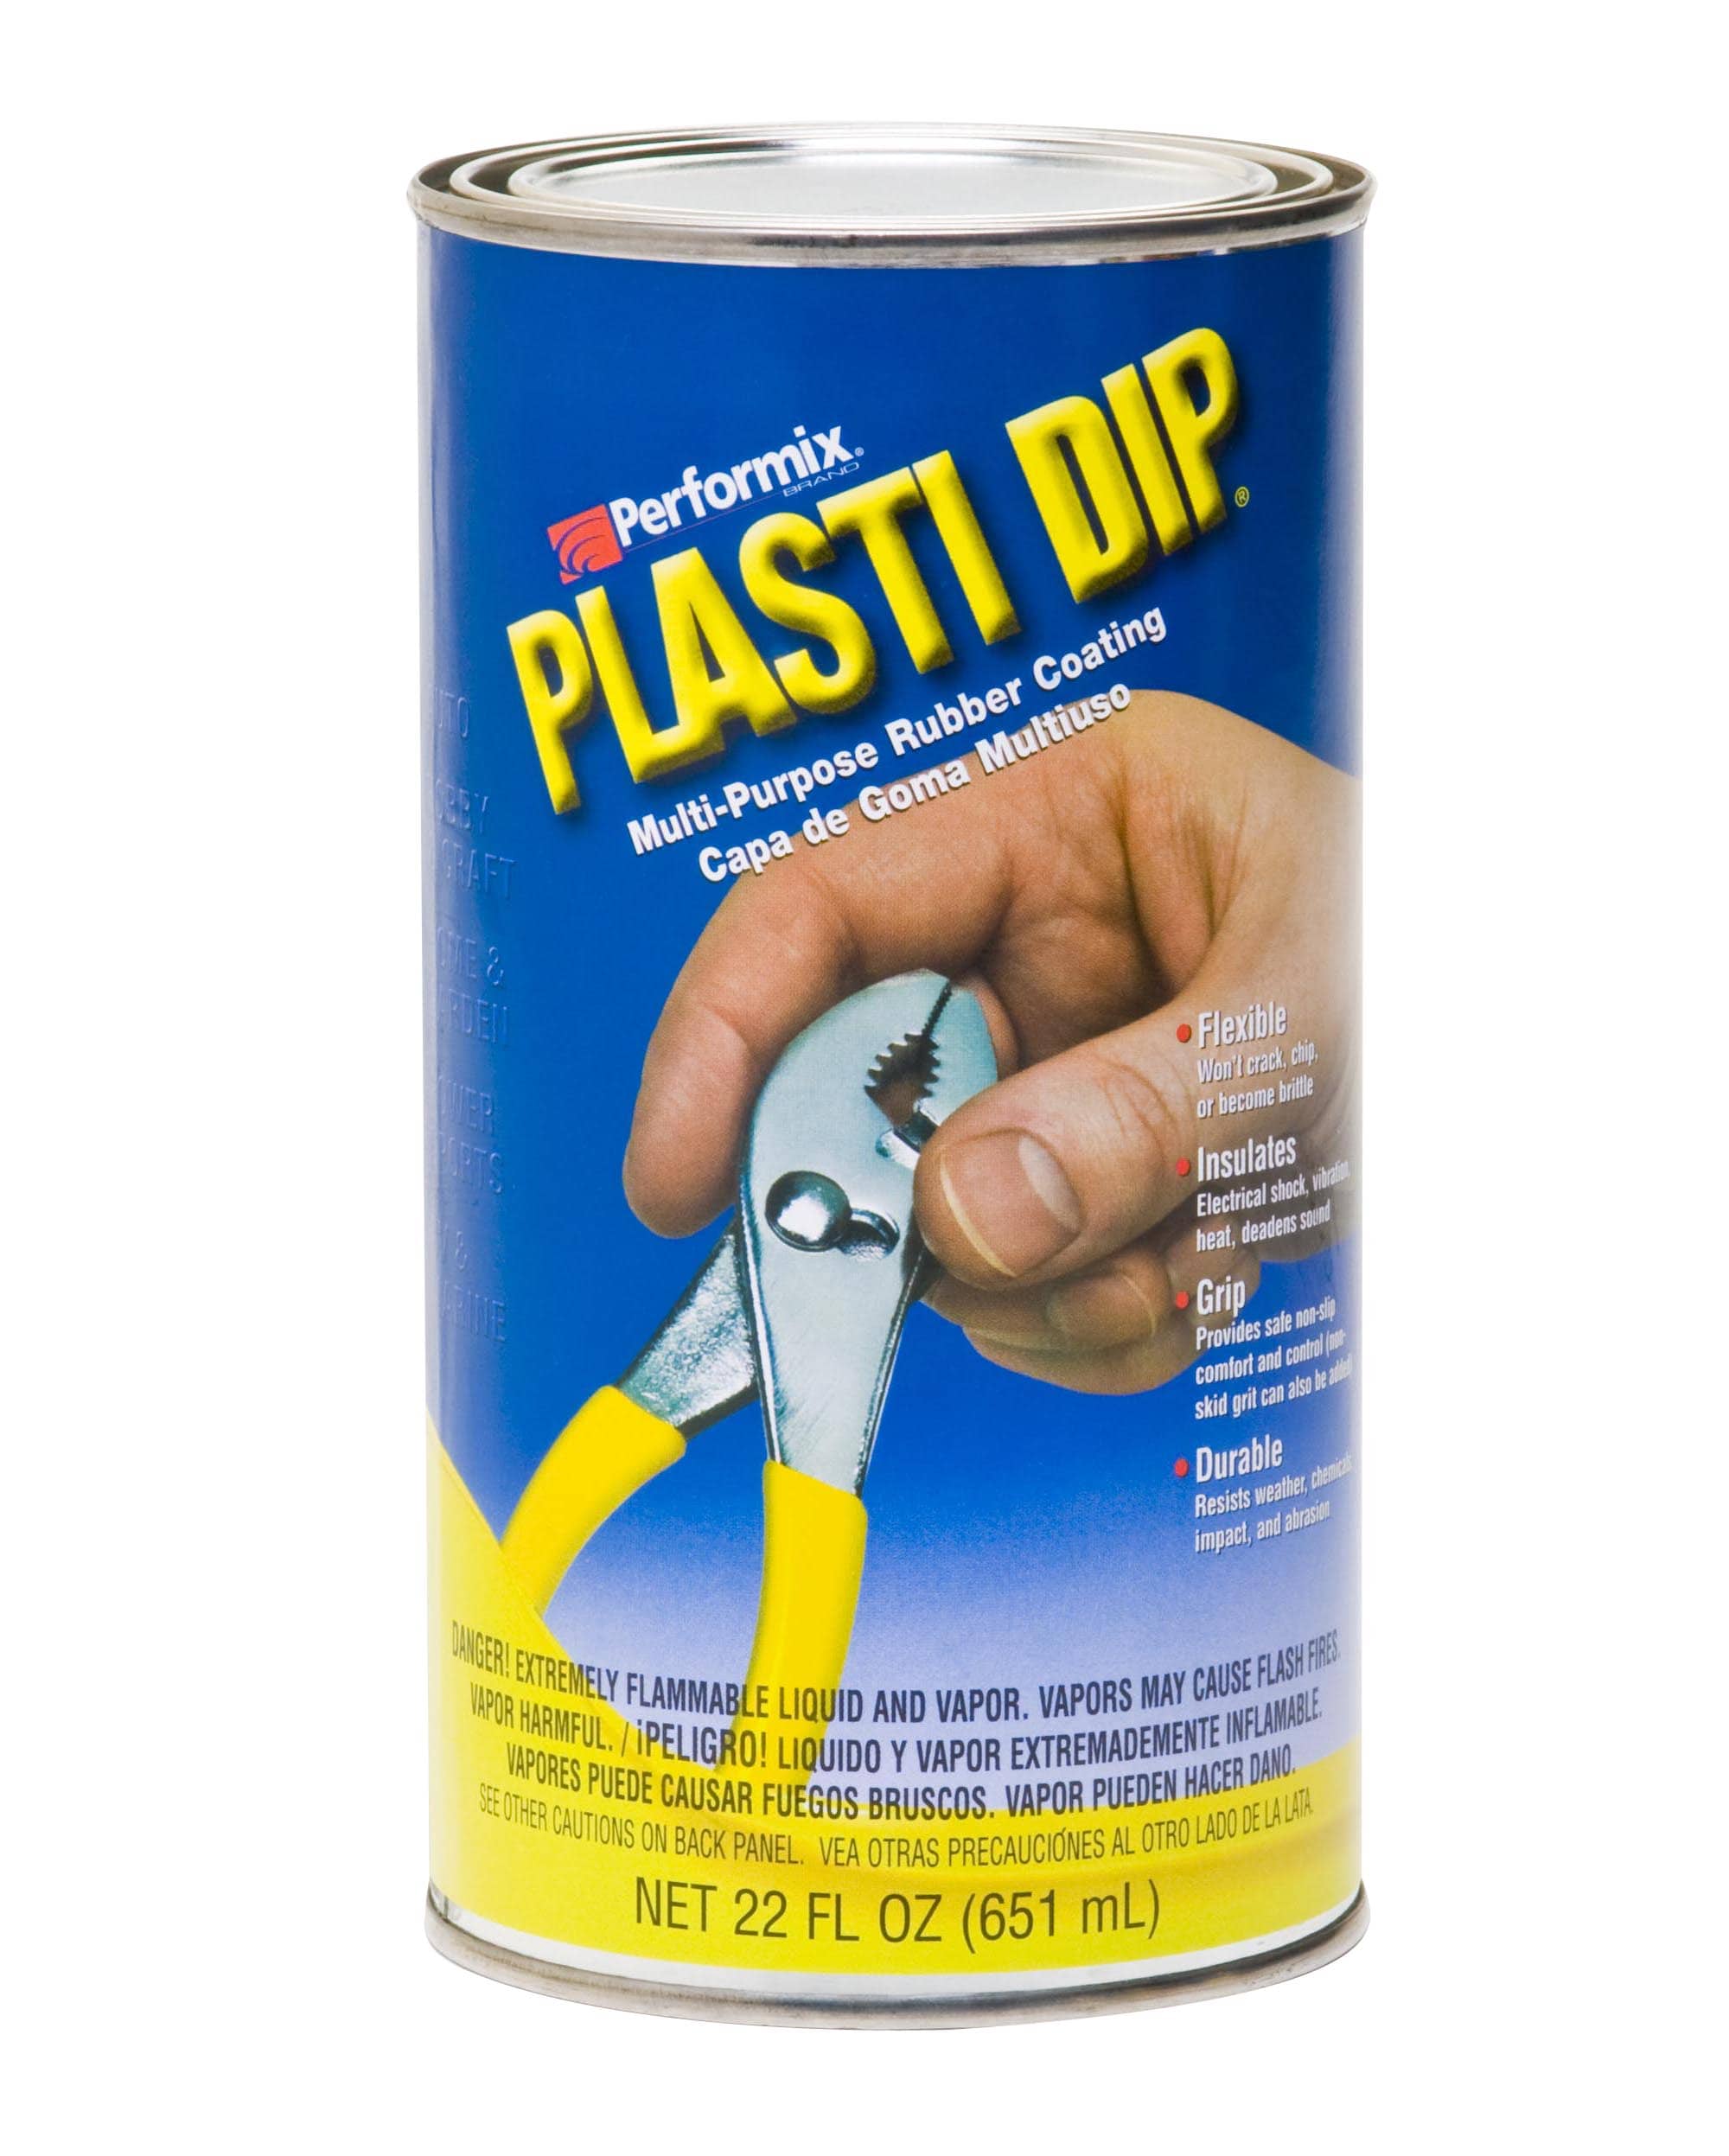 Plasti Dip Products - Rubberized Spray Coatings